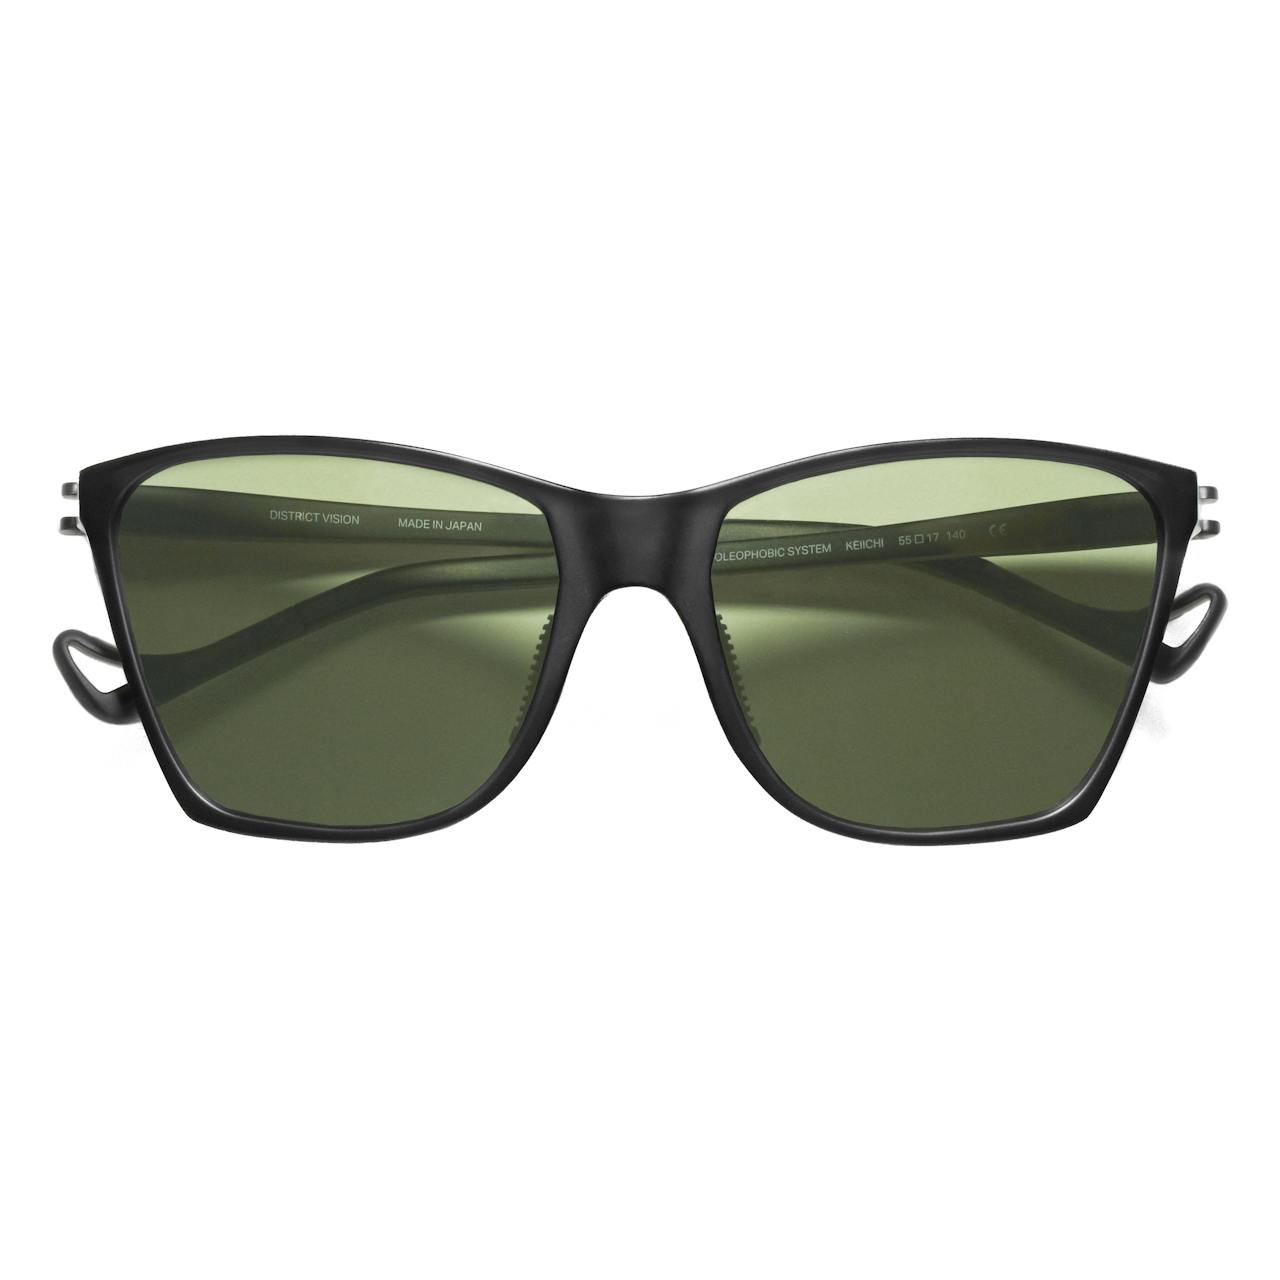 District Vision Keiichi Standard - Running Sunglasses